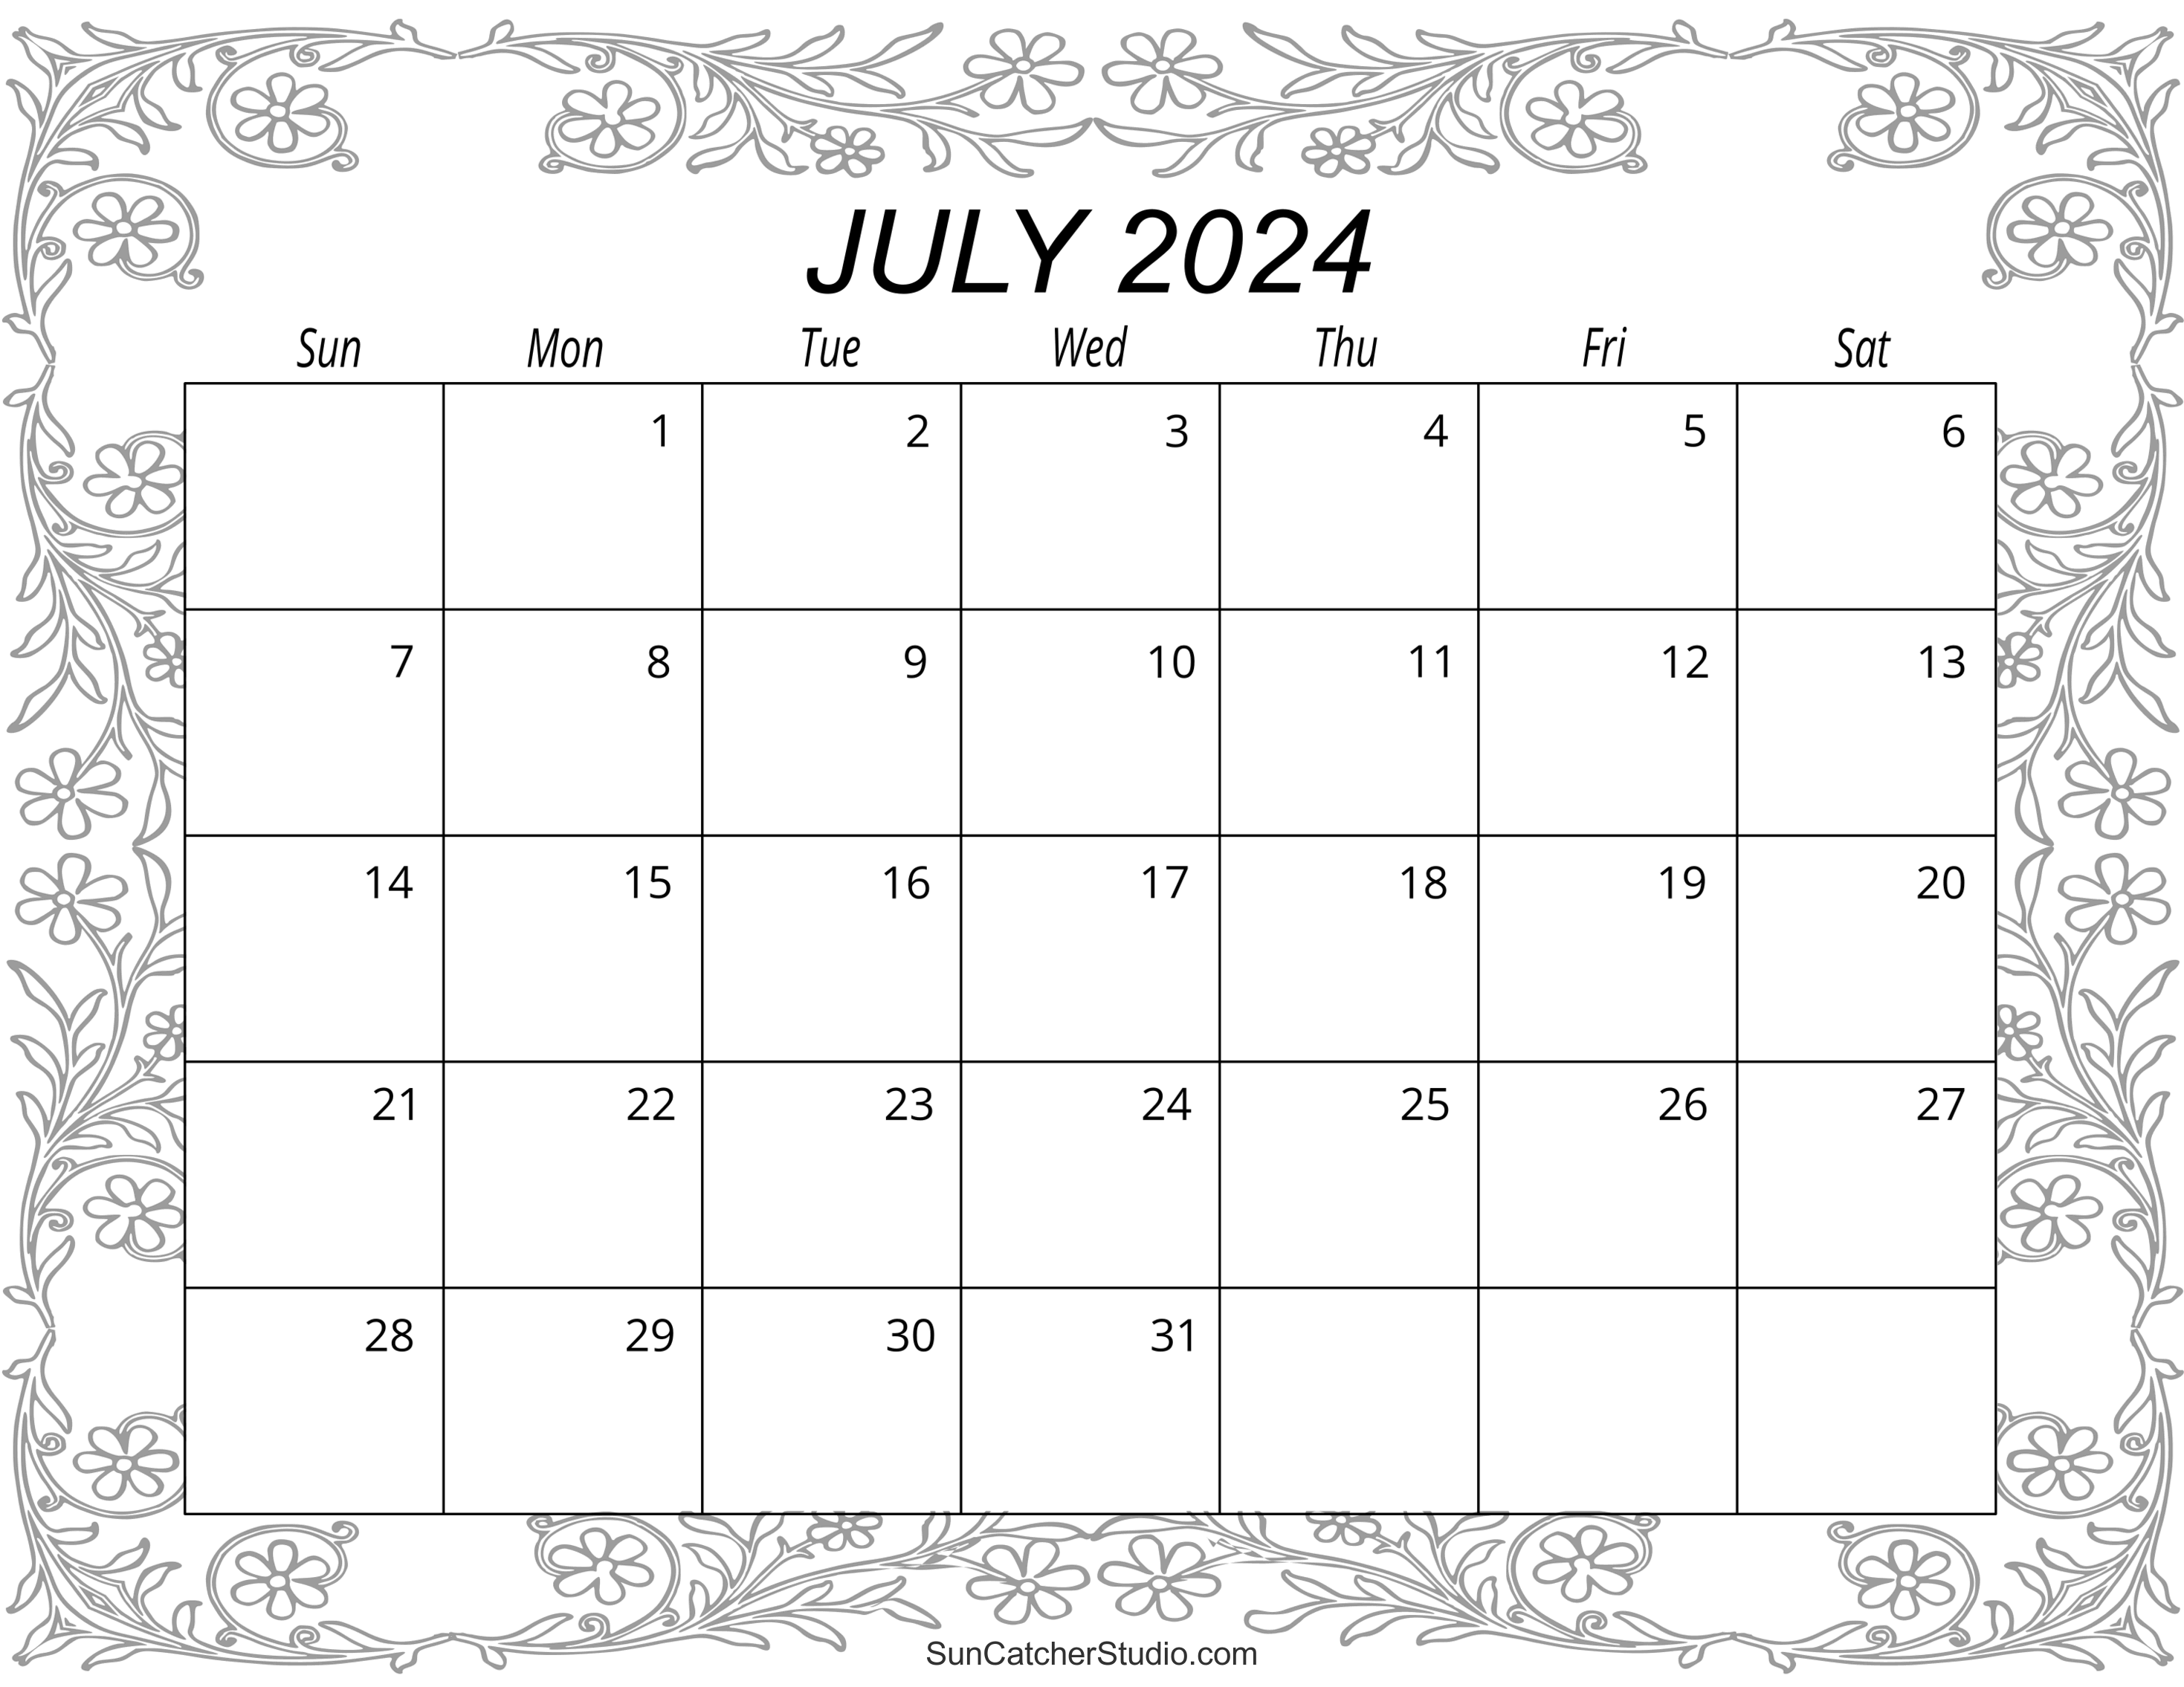 july-2024-calendar-free-printable-diy-projects-patterns-monograms